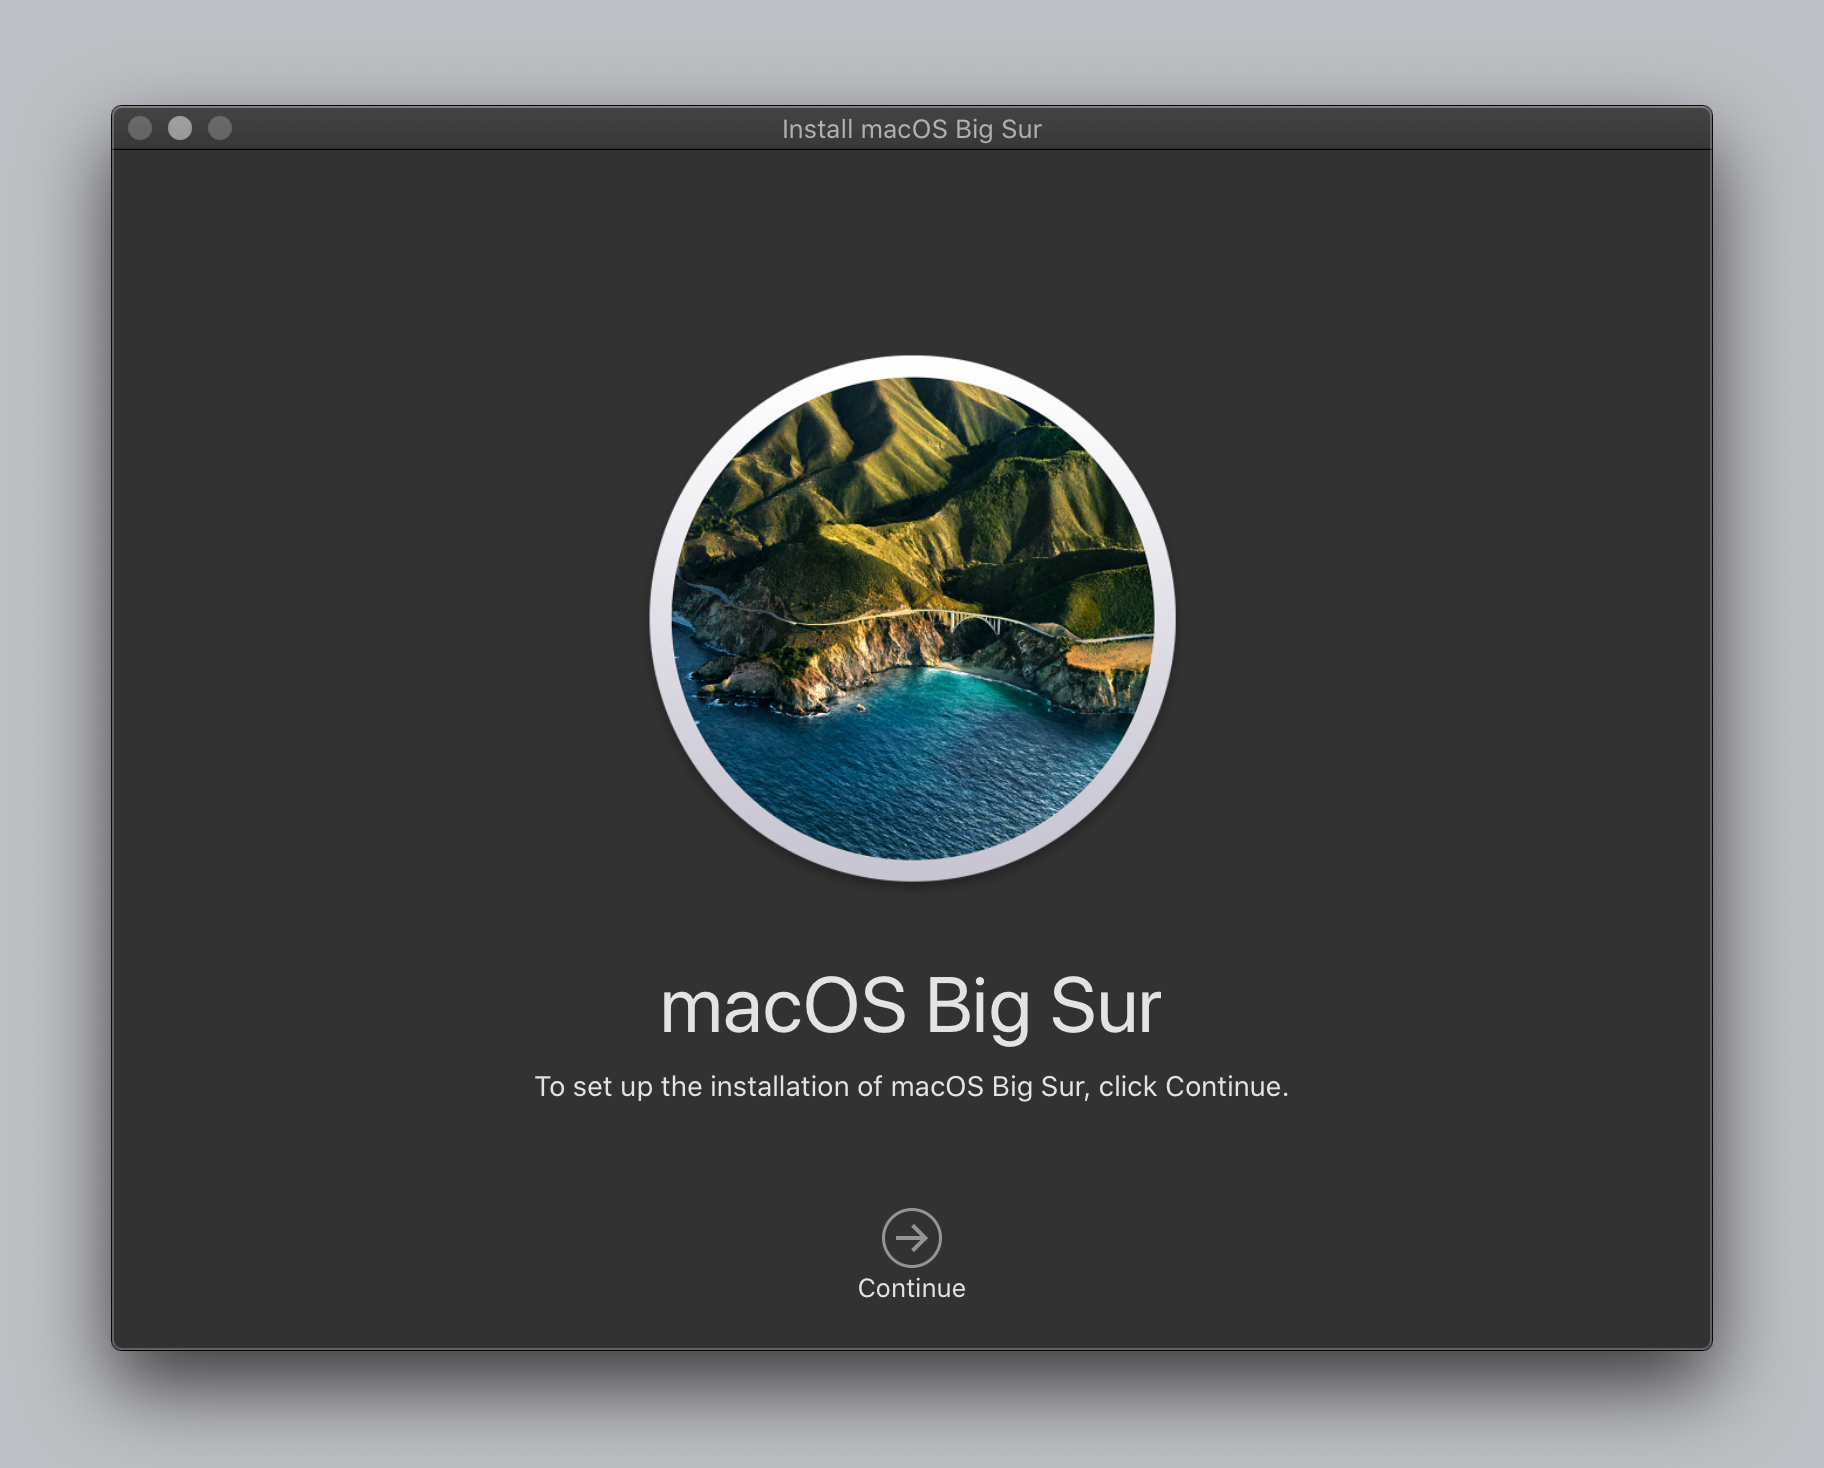 Installing macOS 11 - Big Sur